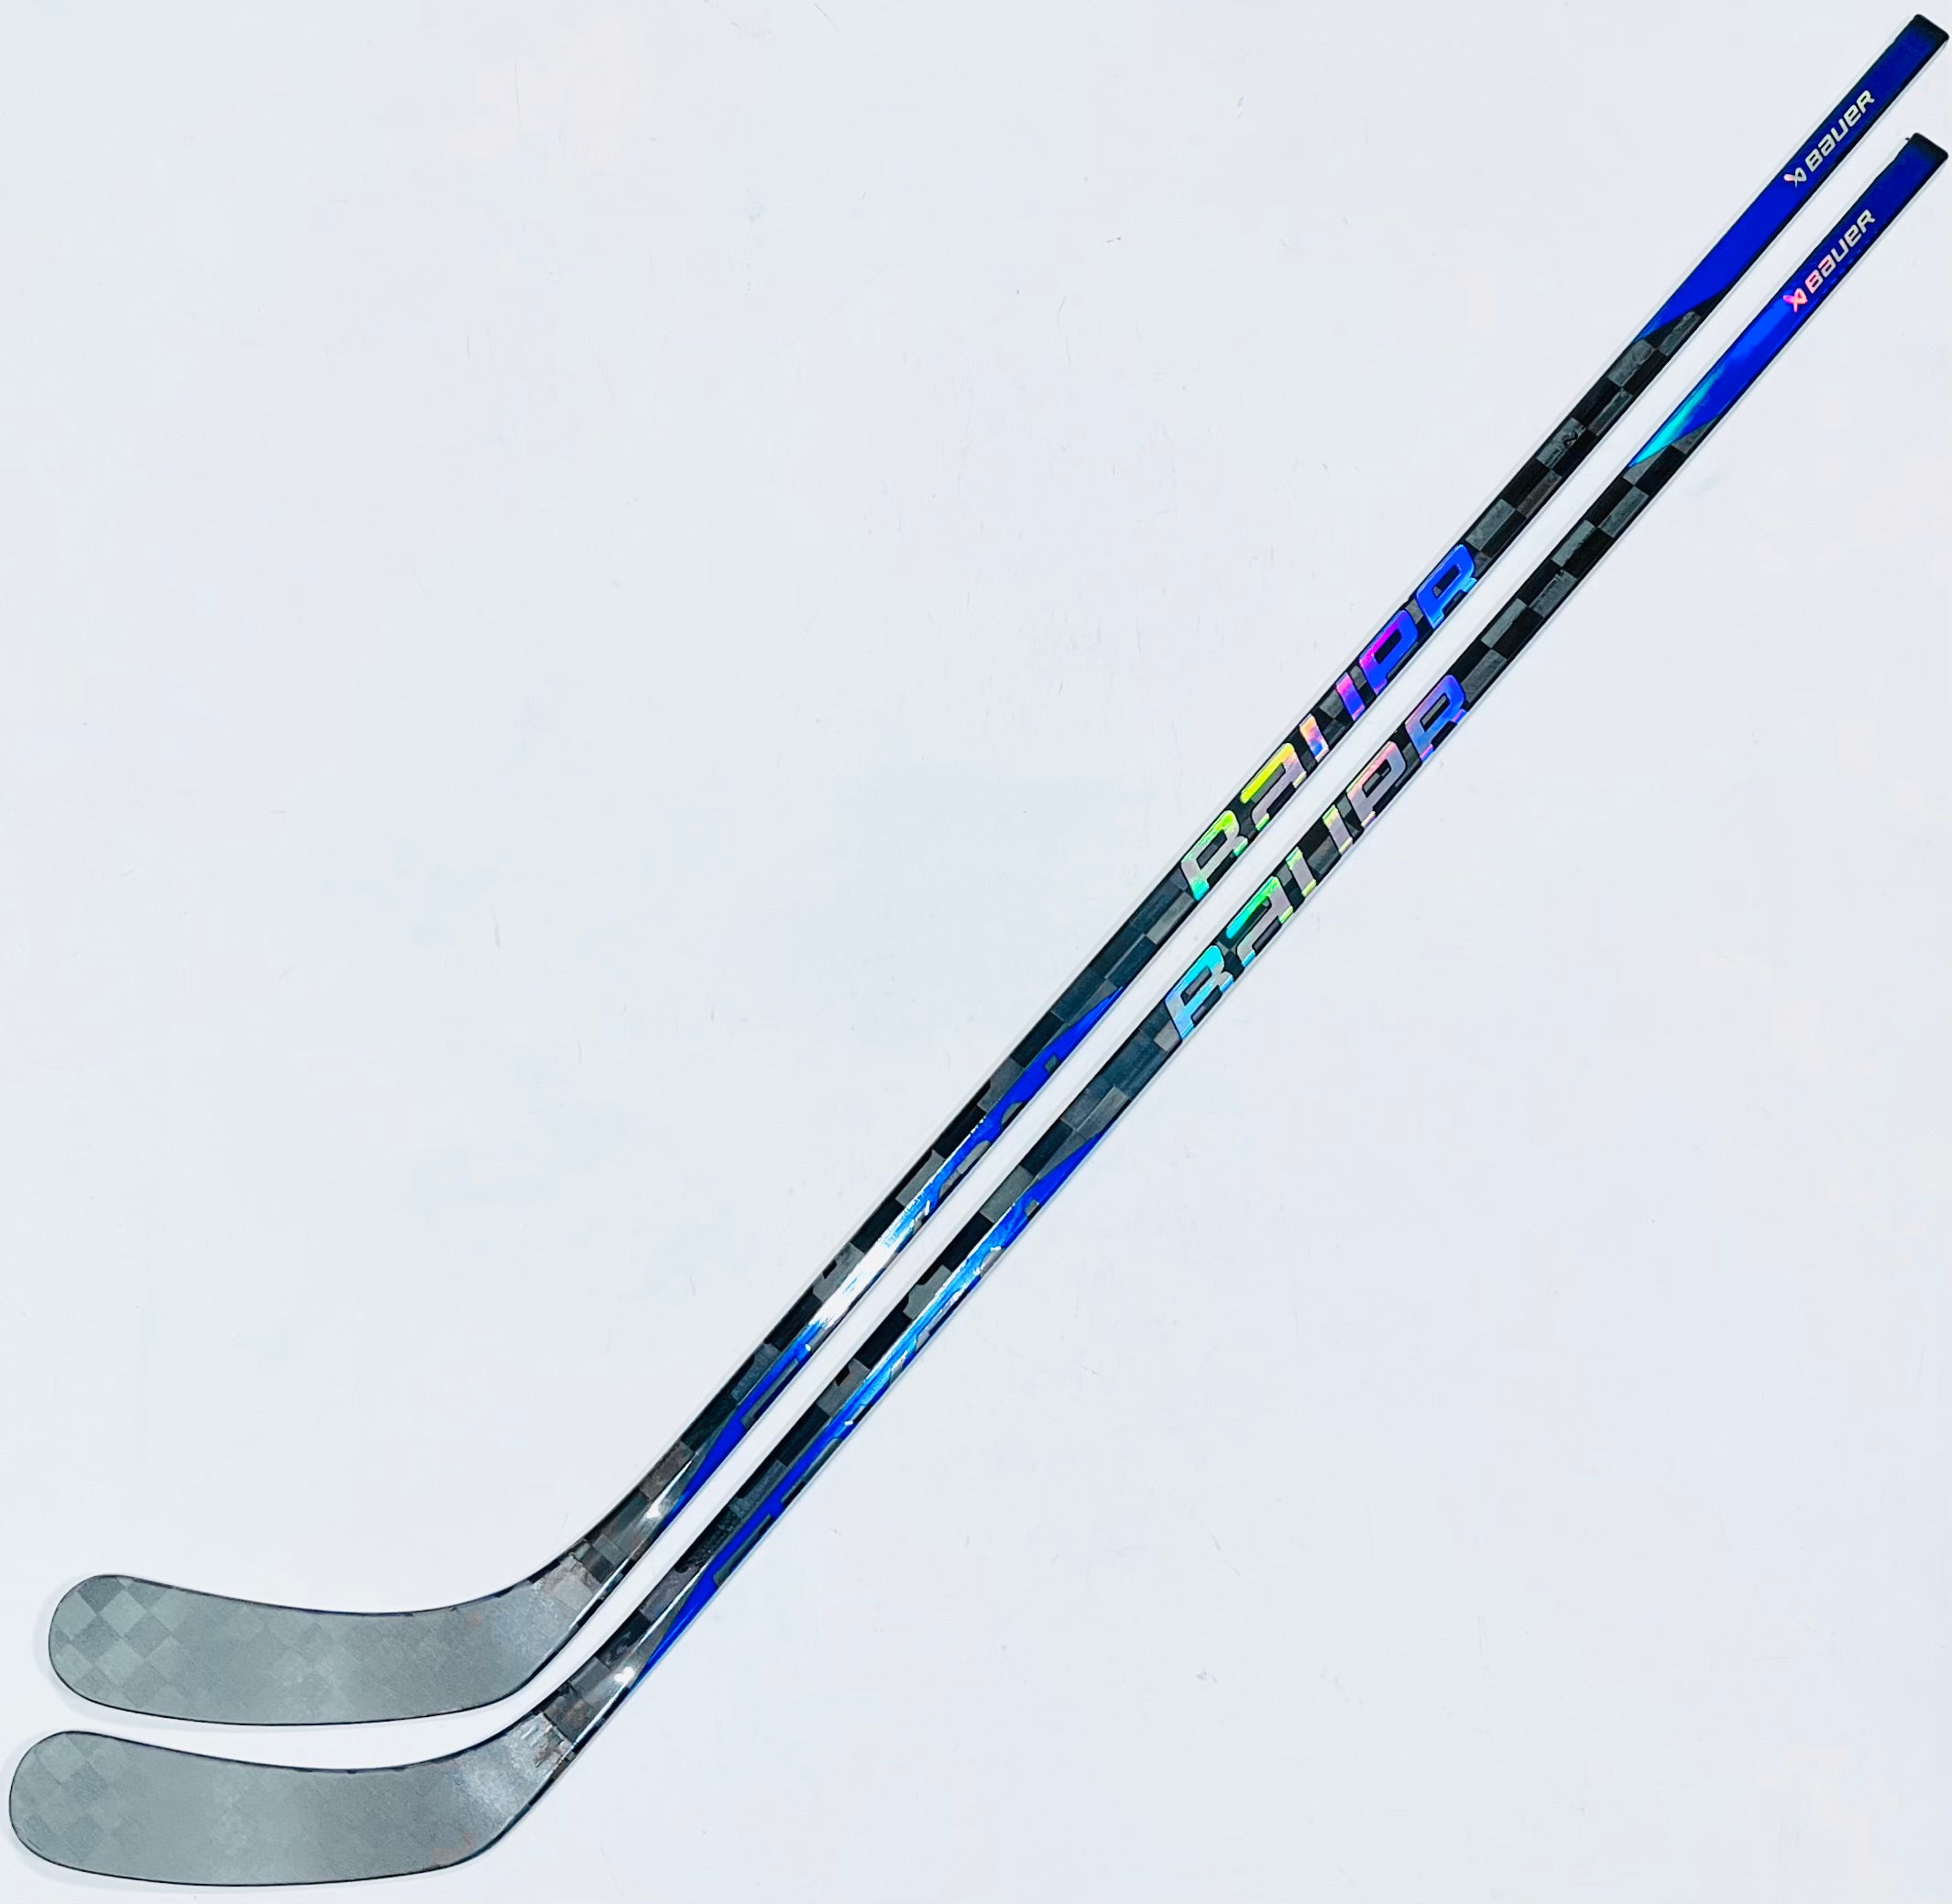 crossed hockey sticks blue